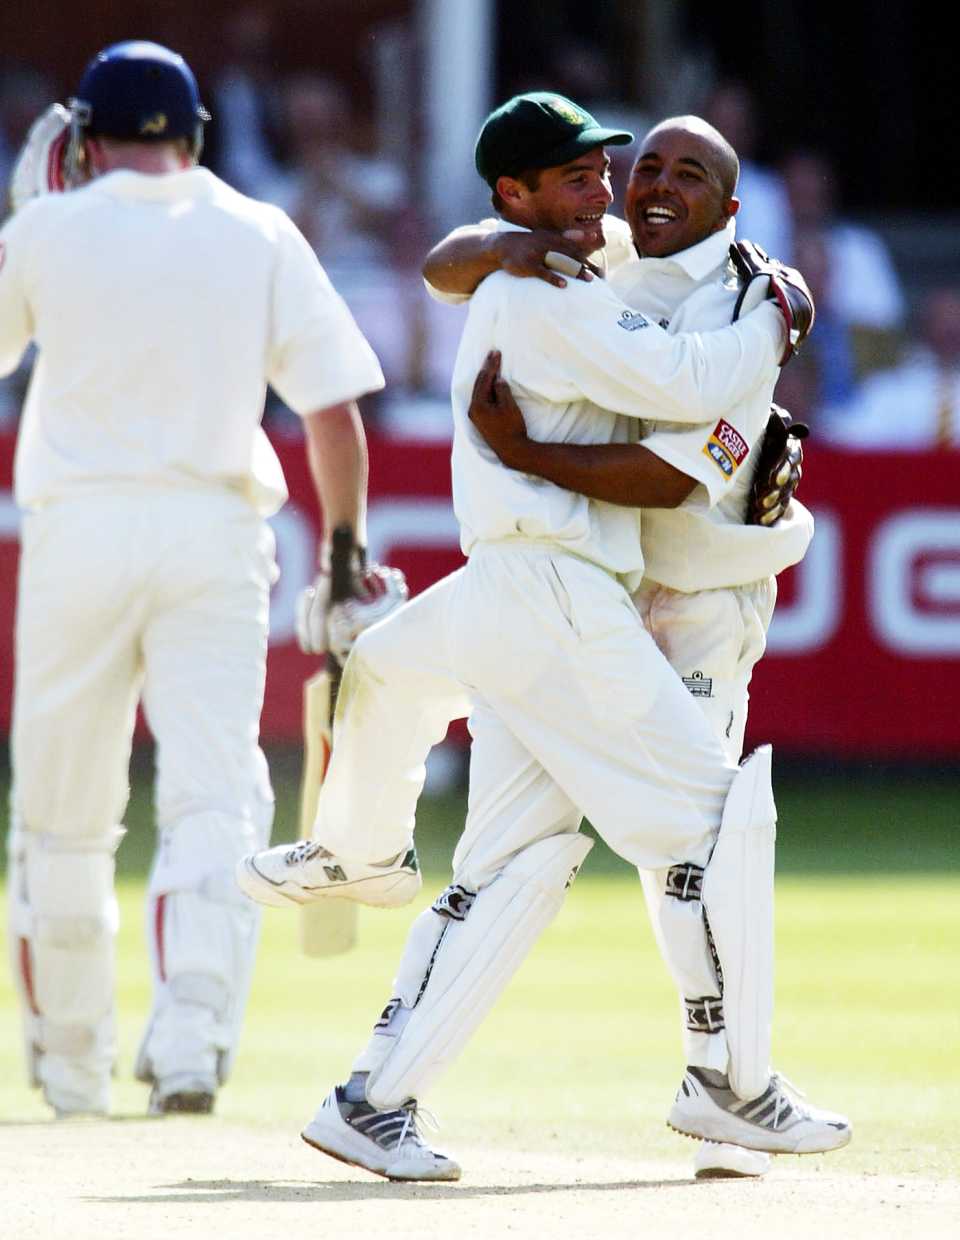 Paul Adams and Mark Boucher celebrate a wicket